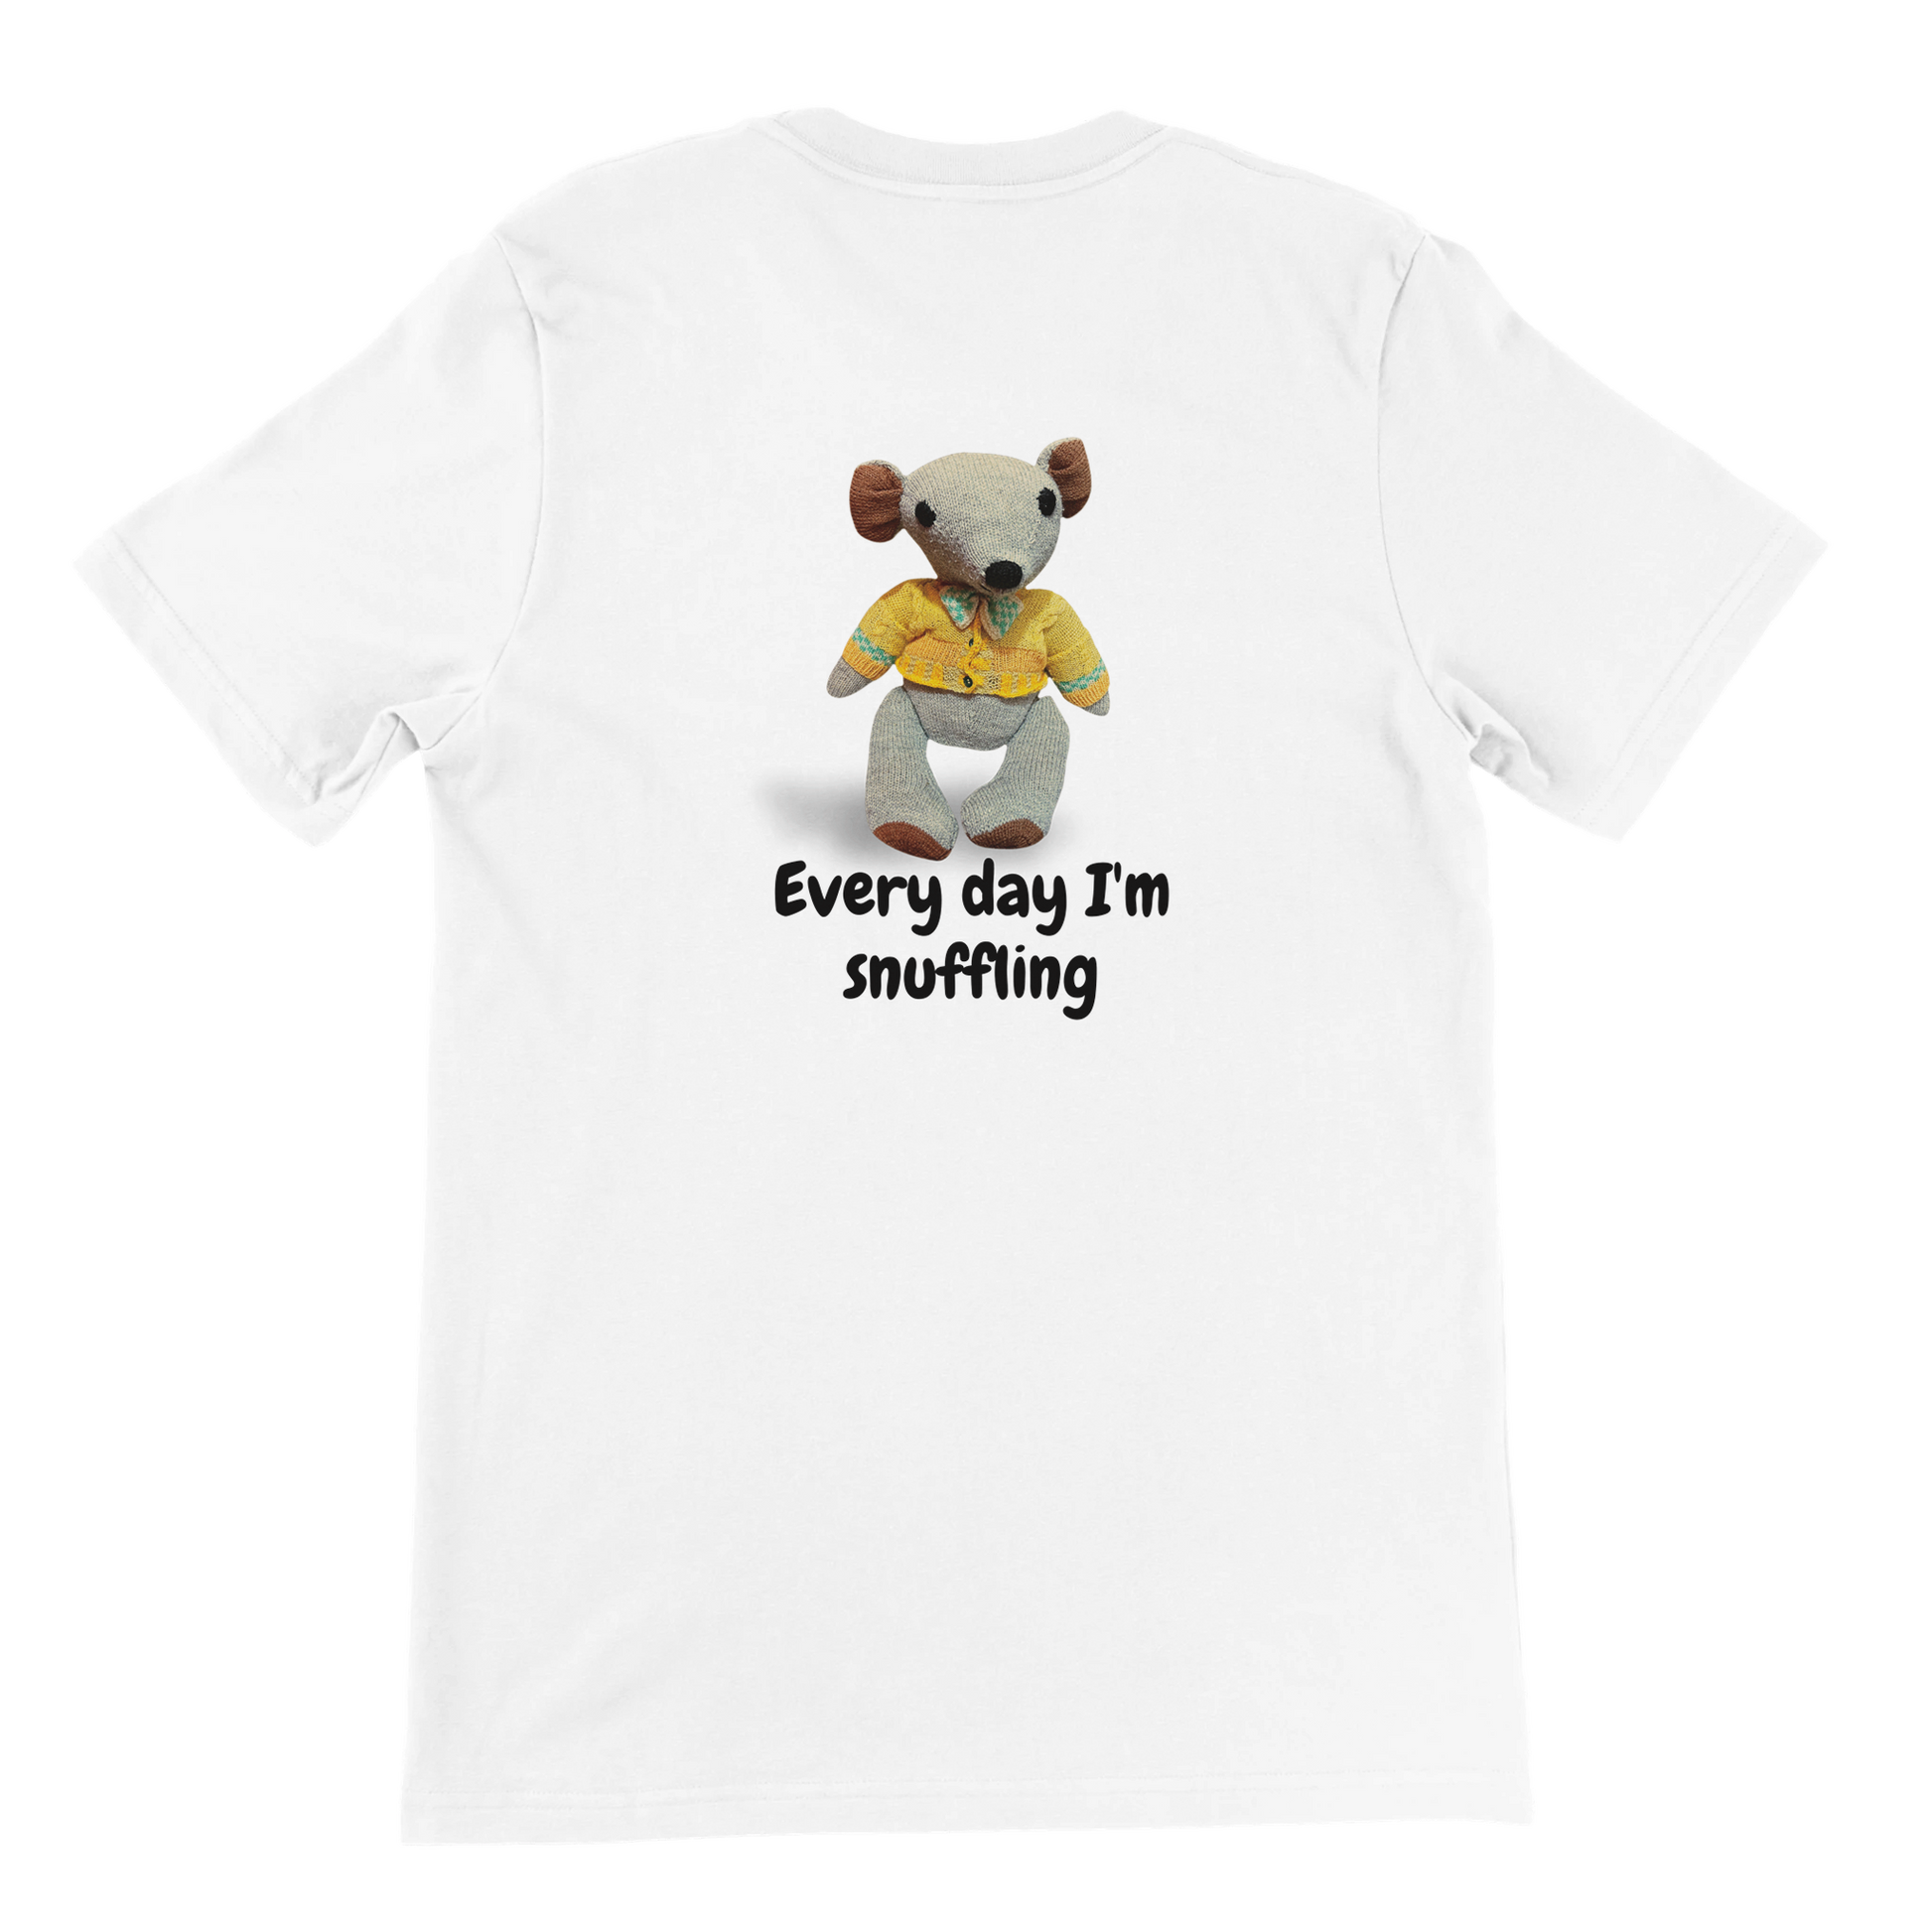 Every day I'm snuffling - Adults Unisex T-shirt Little Bear